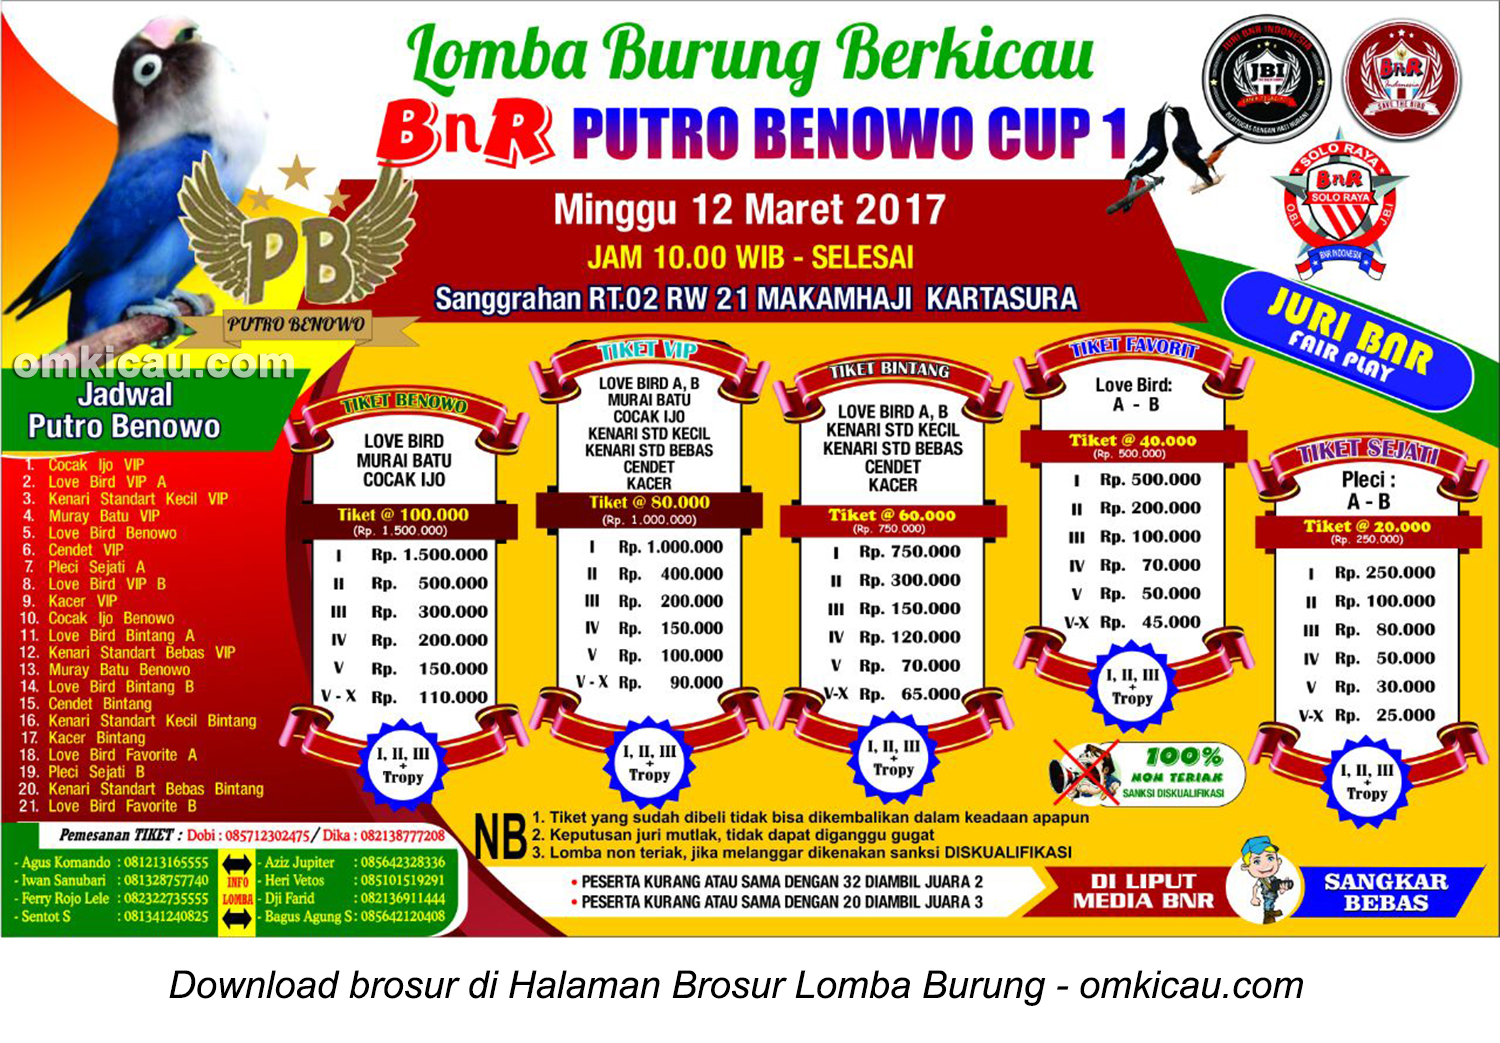 Brosur Revisi Lomba Burung Berkicau BnR Putro Benowo Cup 1, Kartasura, 12 Maret 2017